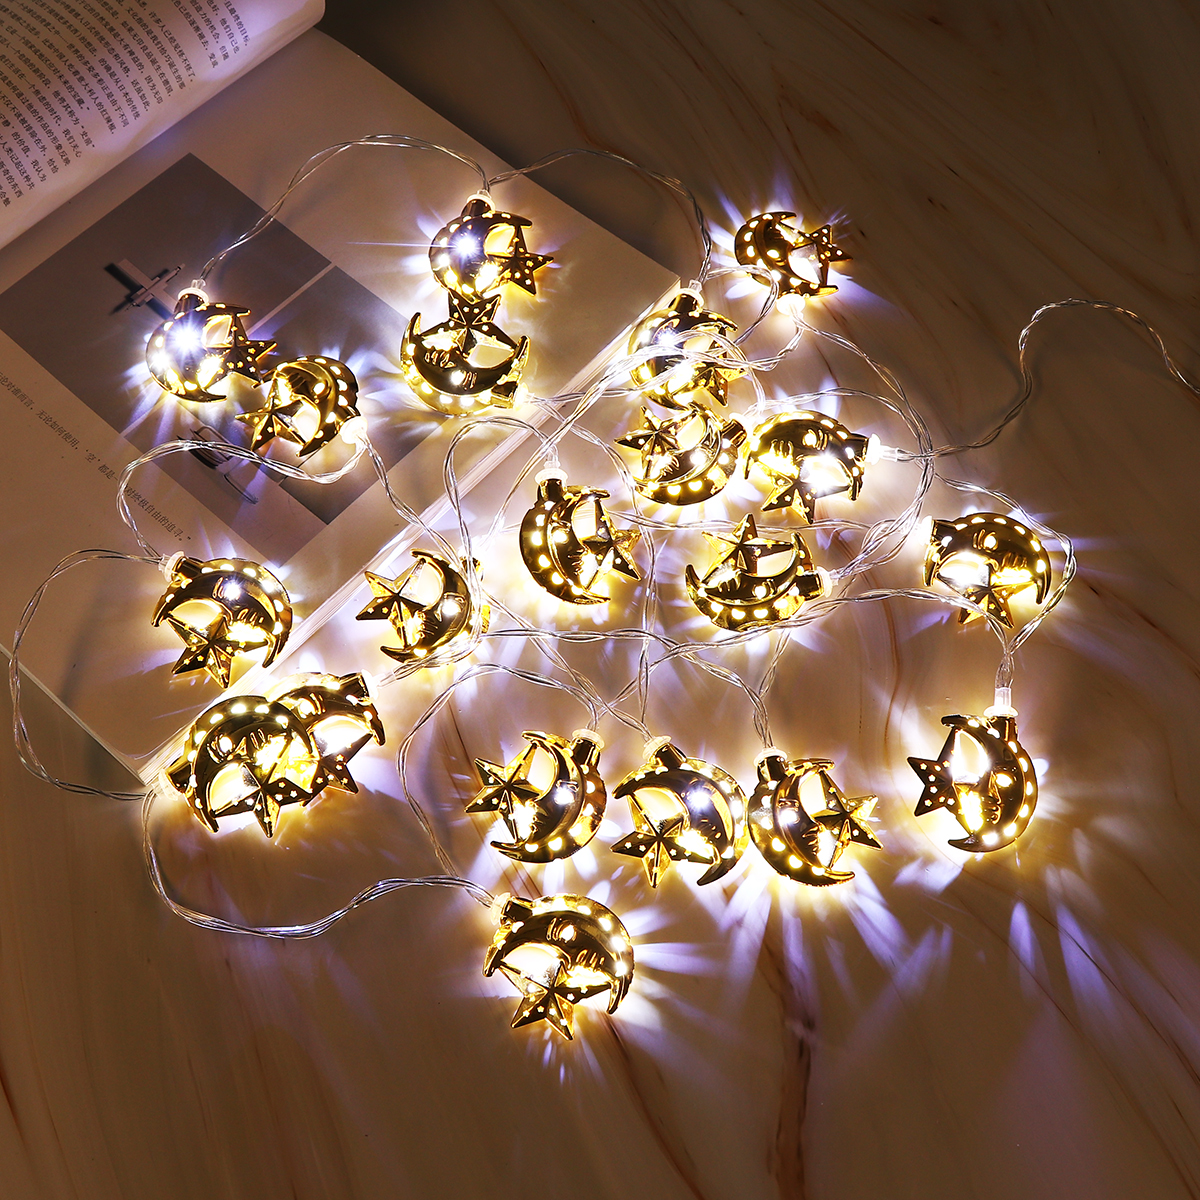 Battery-Supply-3M-20PCS-Moon-Star-Ramadan-LED-Lamp-String-Light-for-Islamic-Christmas-Holiday-Decor-1457476-7